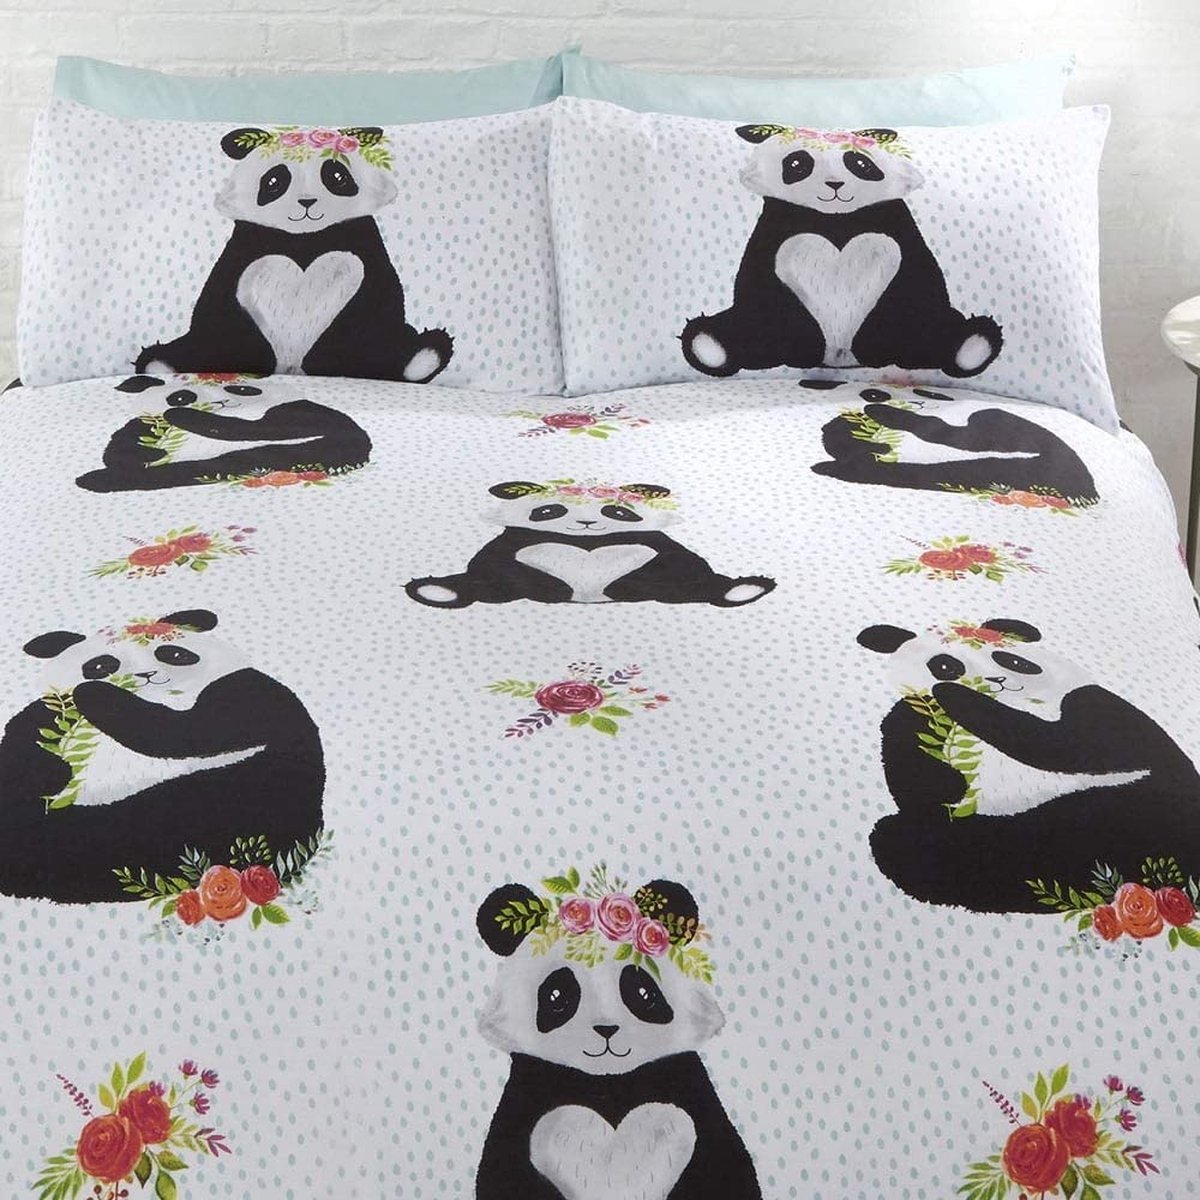 Pandabeer tweepersoons dekbedovertrek - 200 x 200 cm. - Panda dekbed |  bol.com